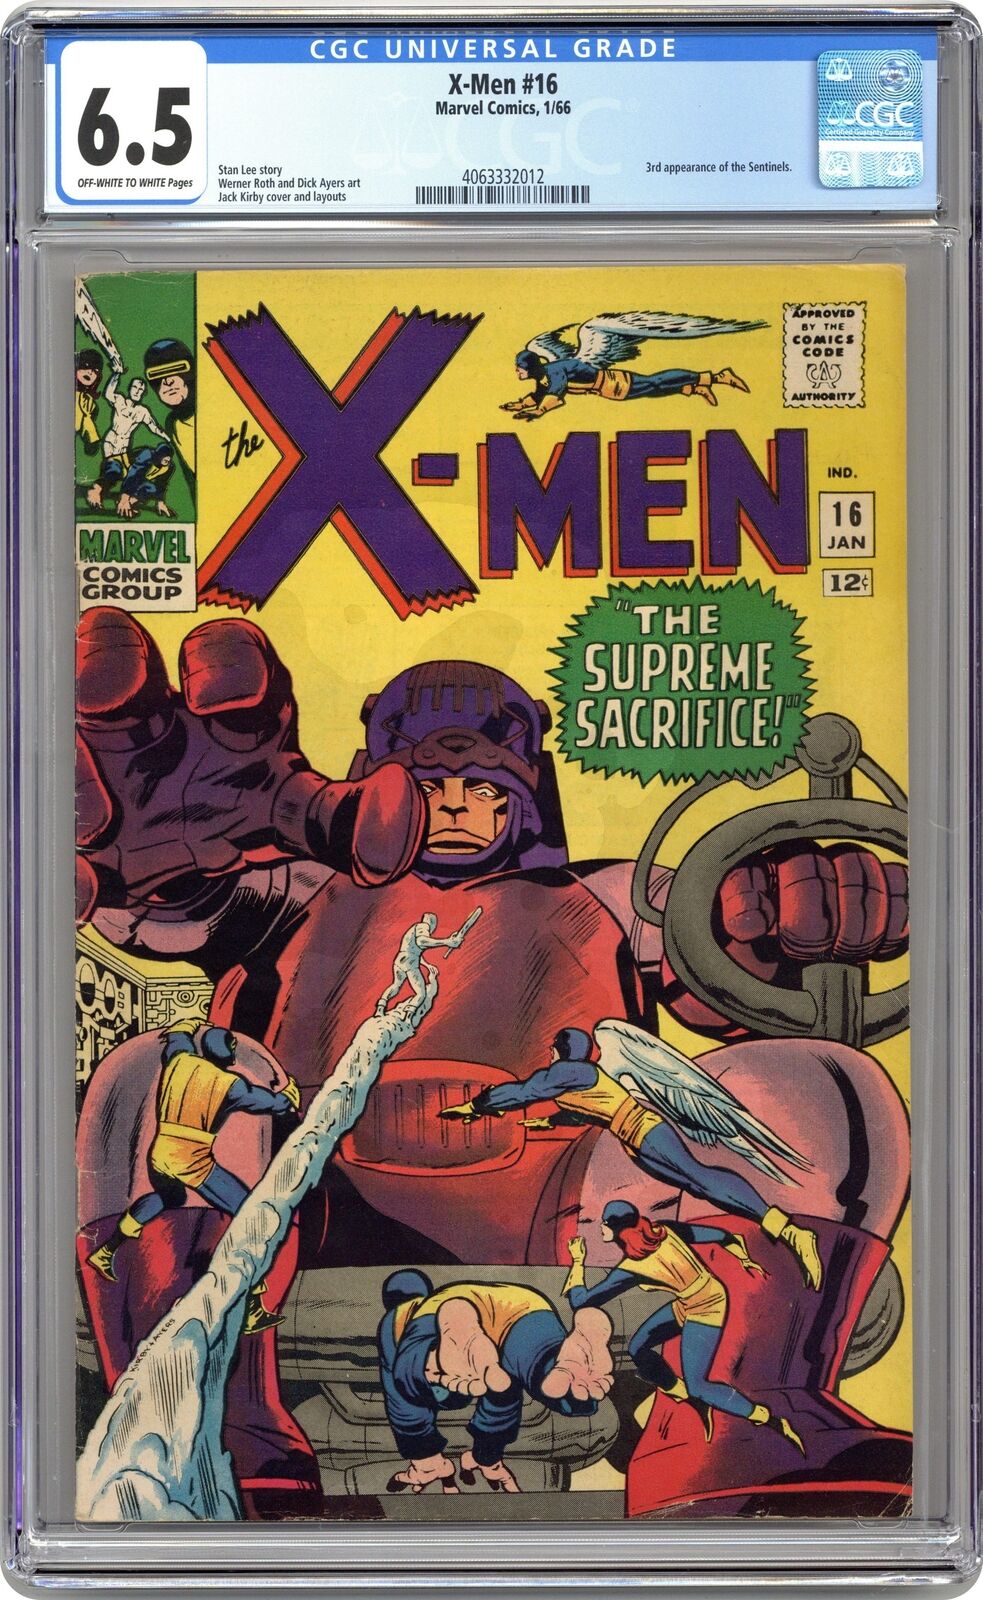 Uncanny X-Men #16 CGC 6.5 1966 4063332012